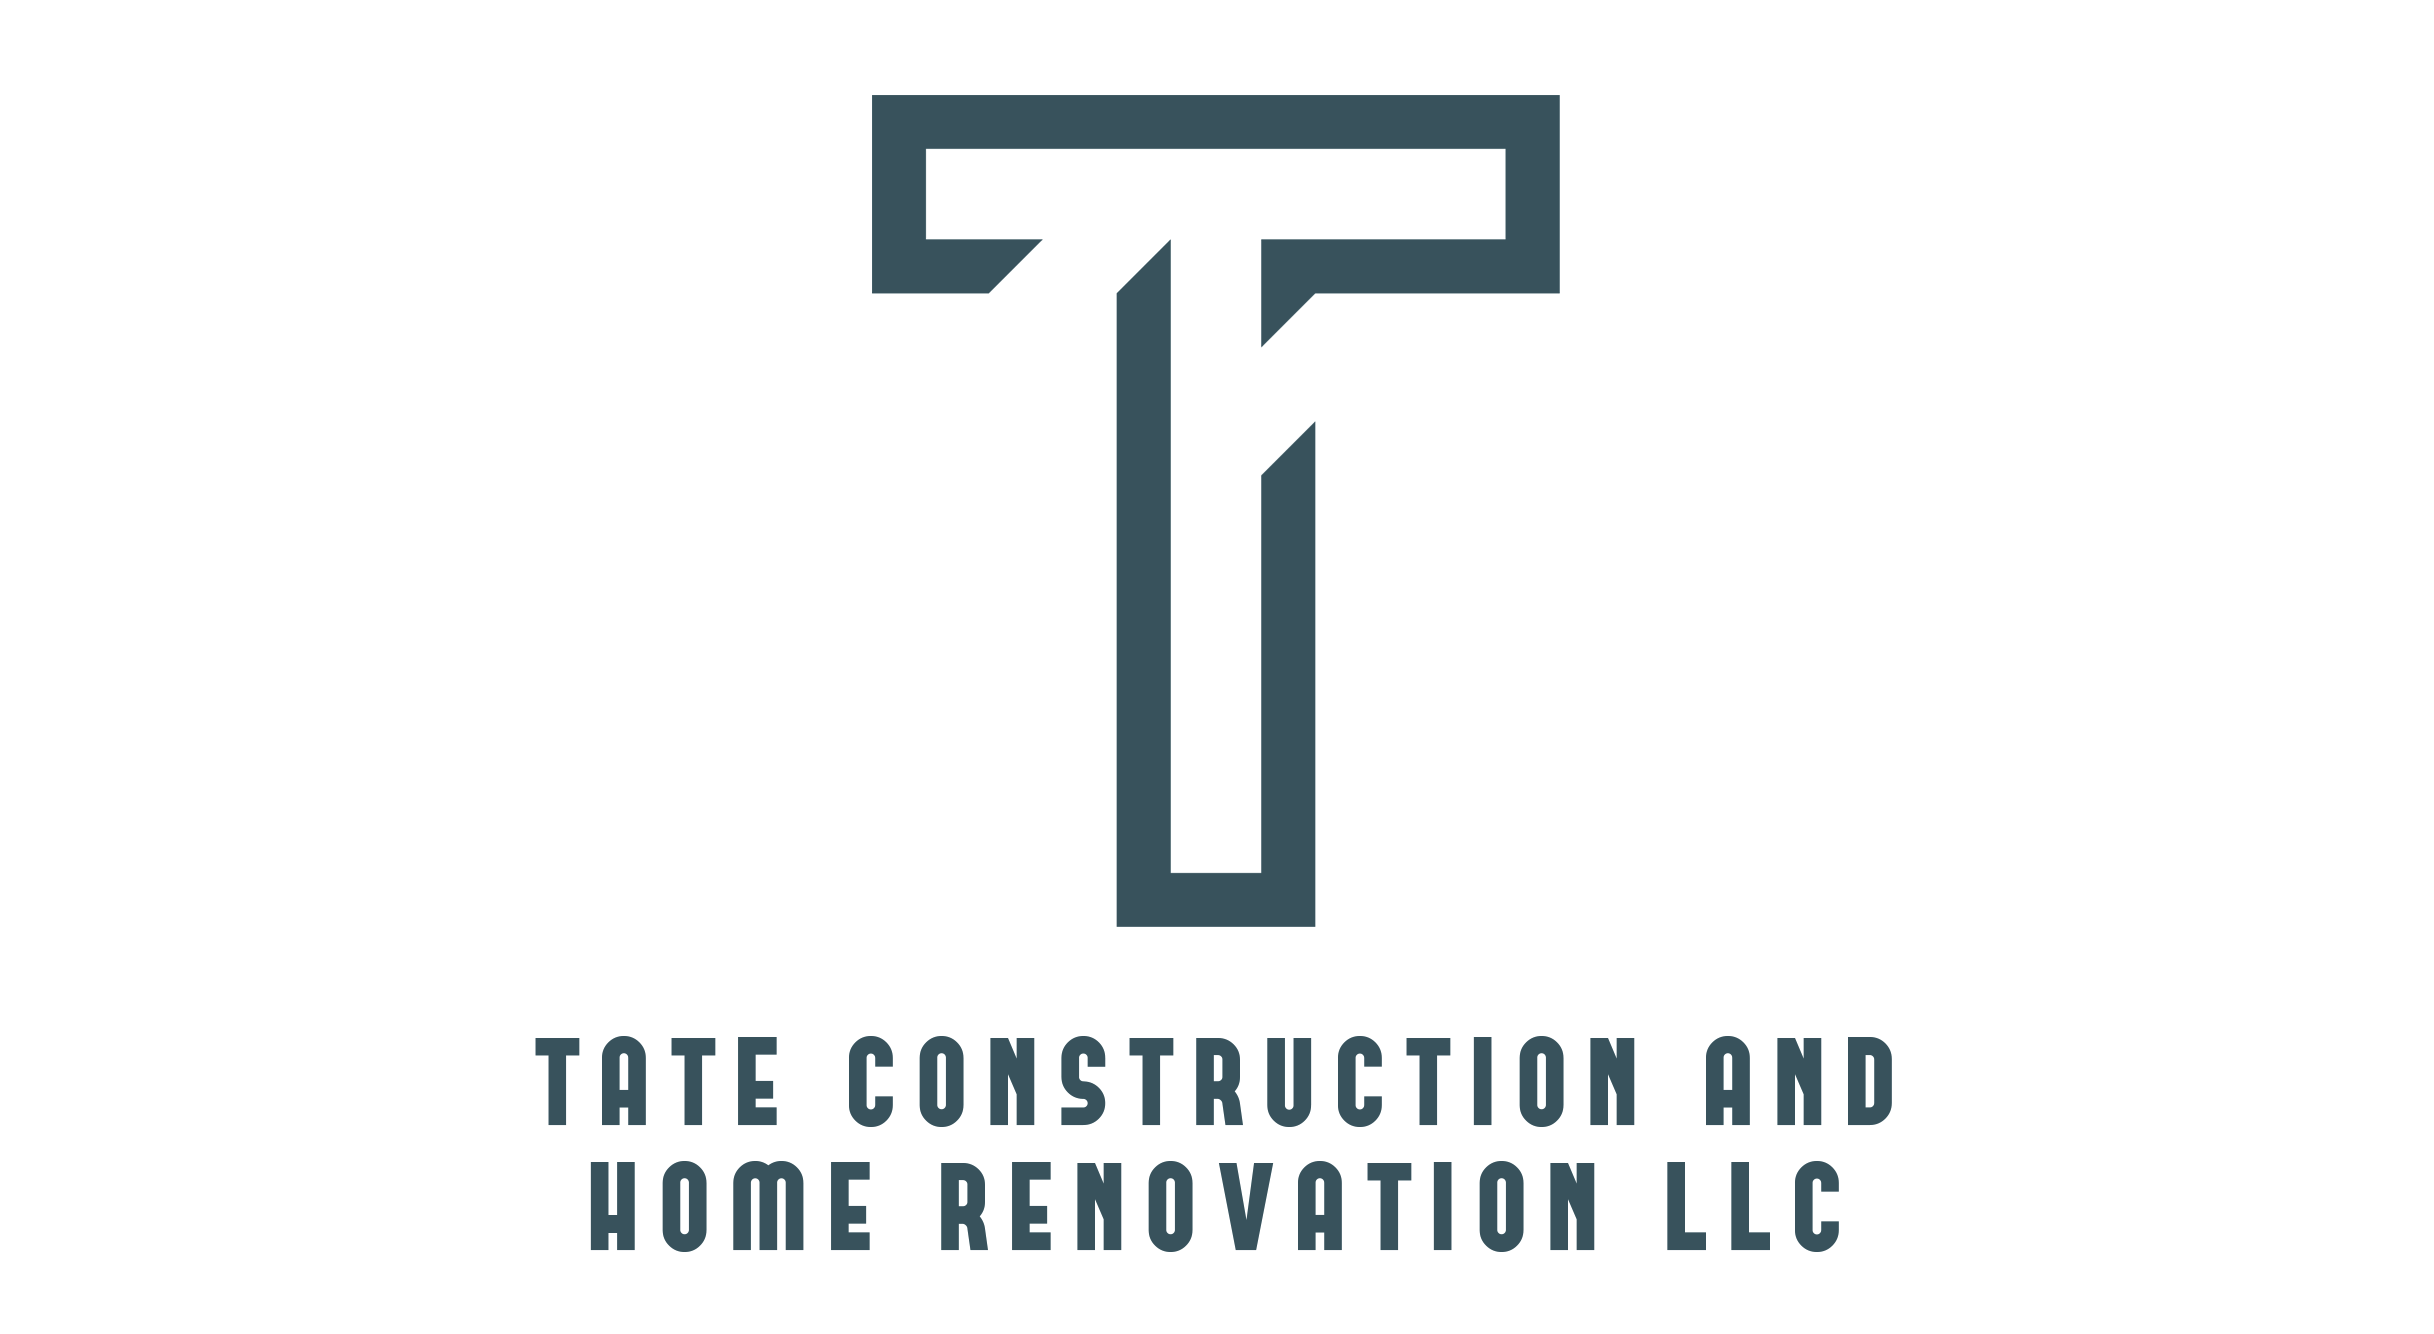 Tate Construction and Home Renovation LLC logo